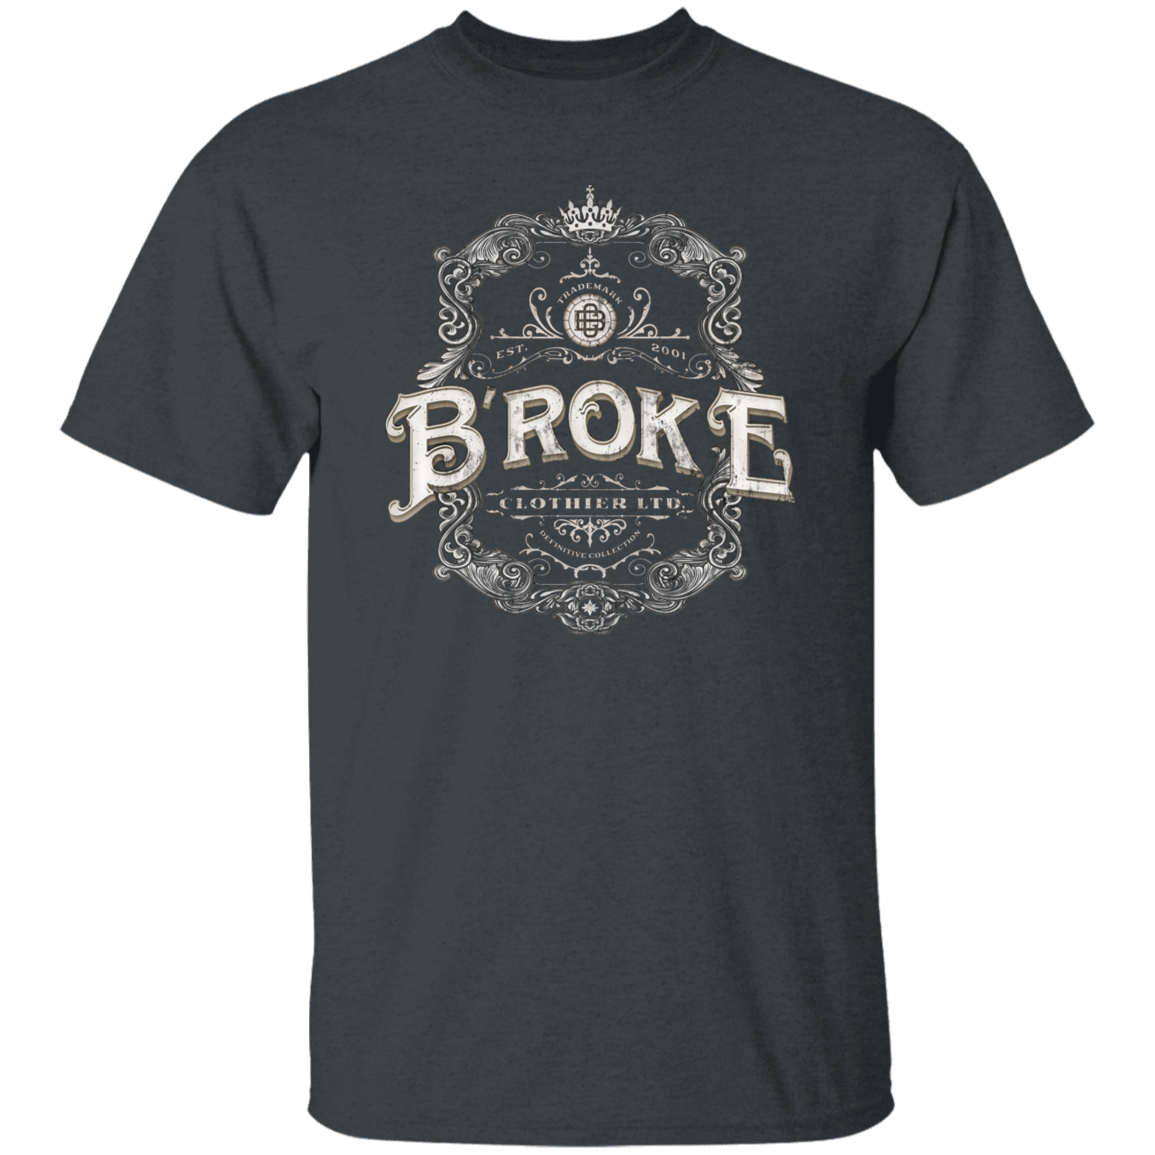 B'roke Clothier Limited  - PRIVATE LABEL LTD. EDITION NO. 15A T-Shirt